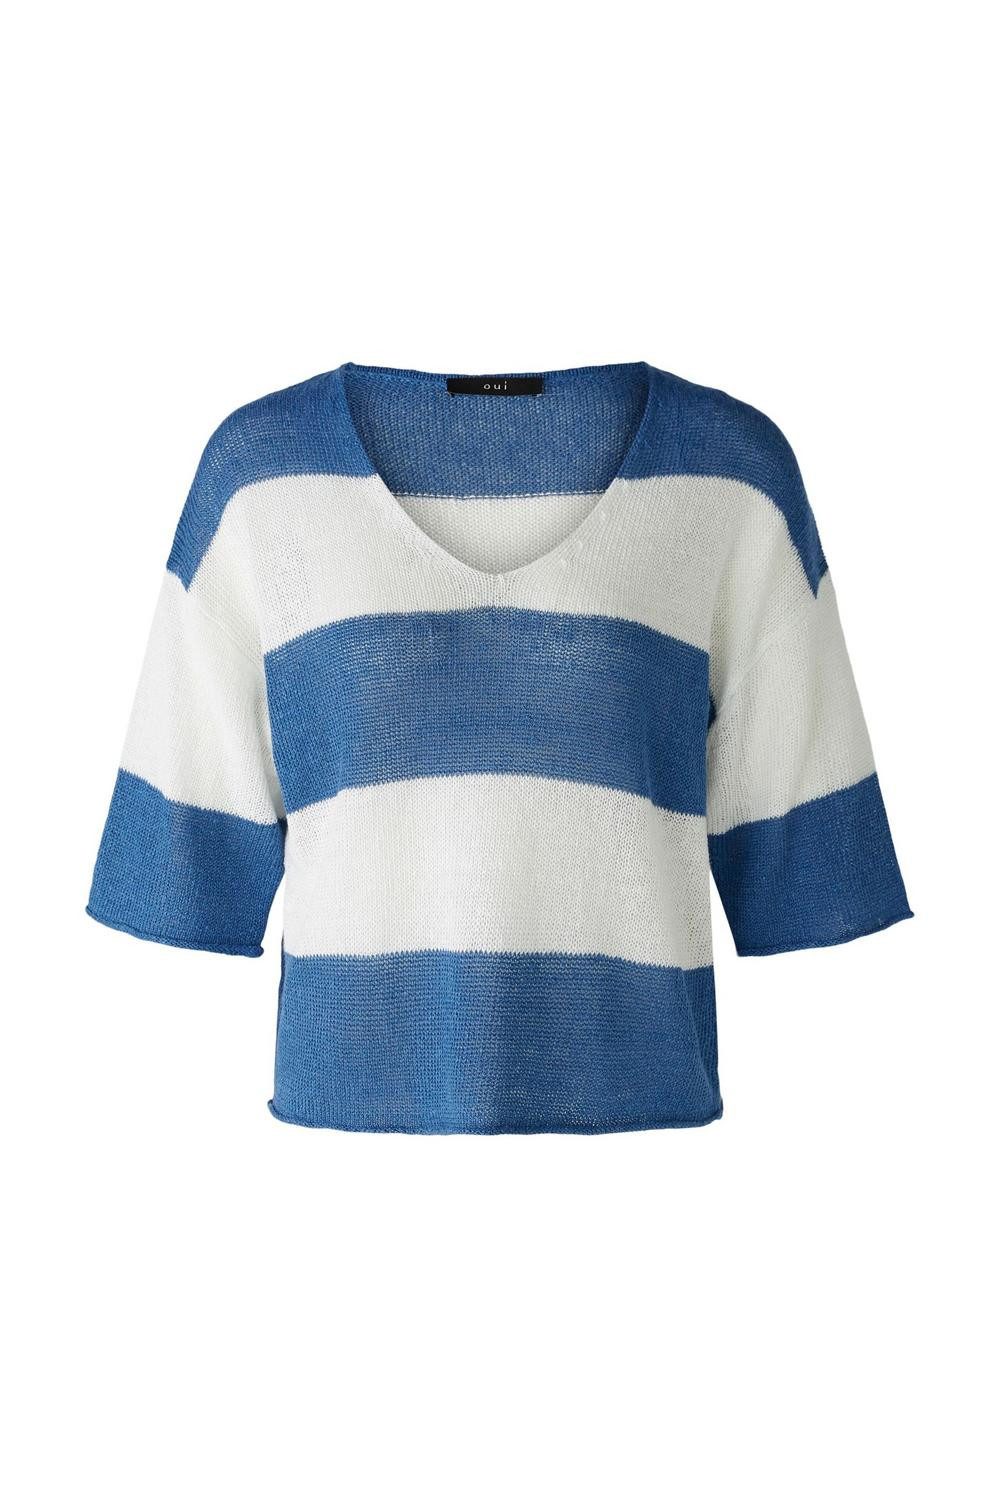 Oui Sweatshirt Pullover, blue white